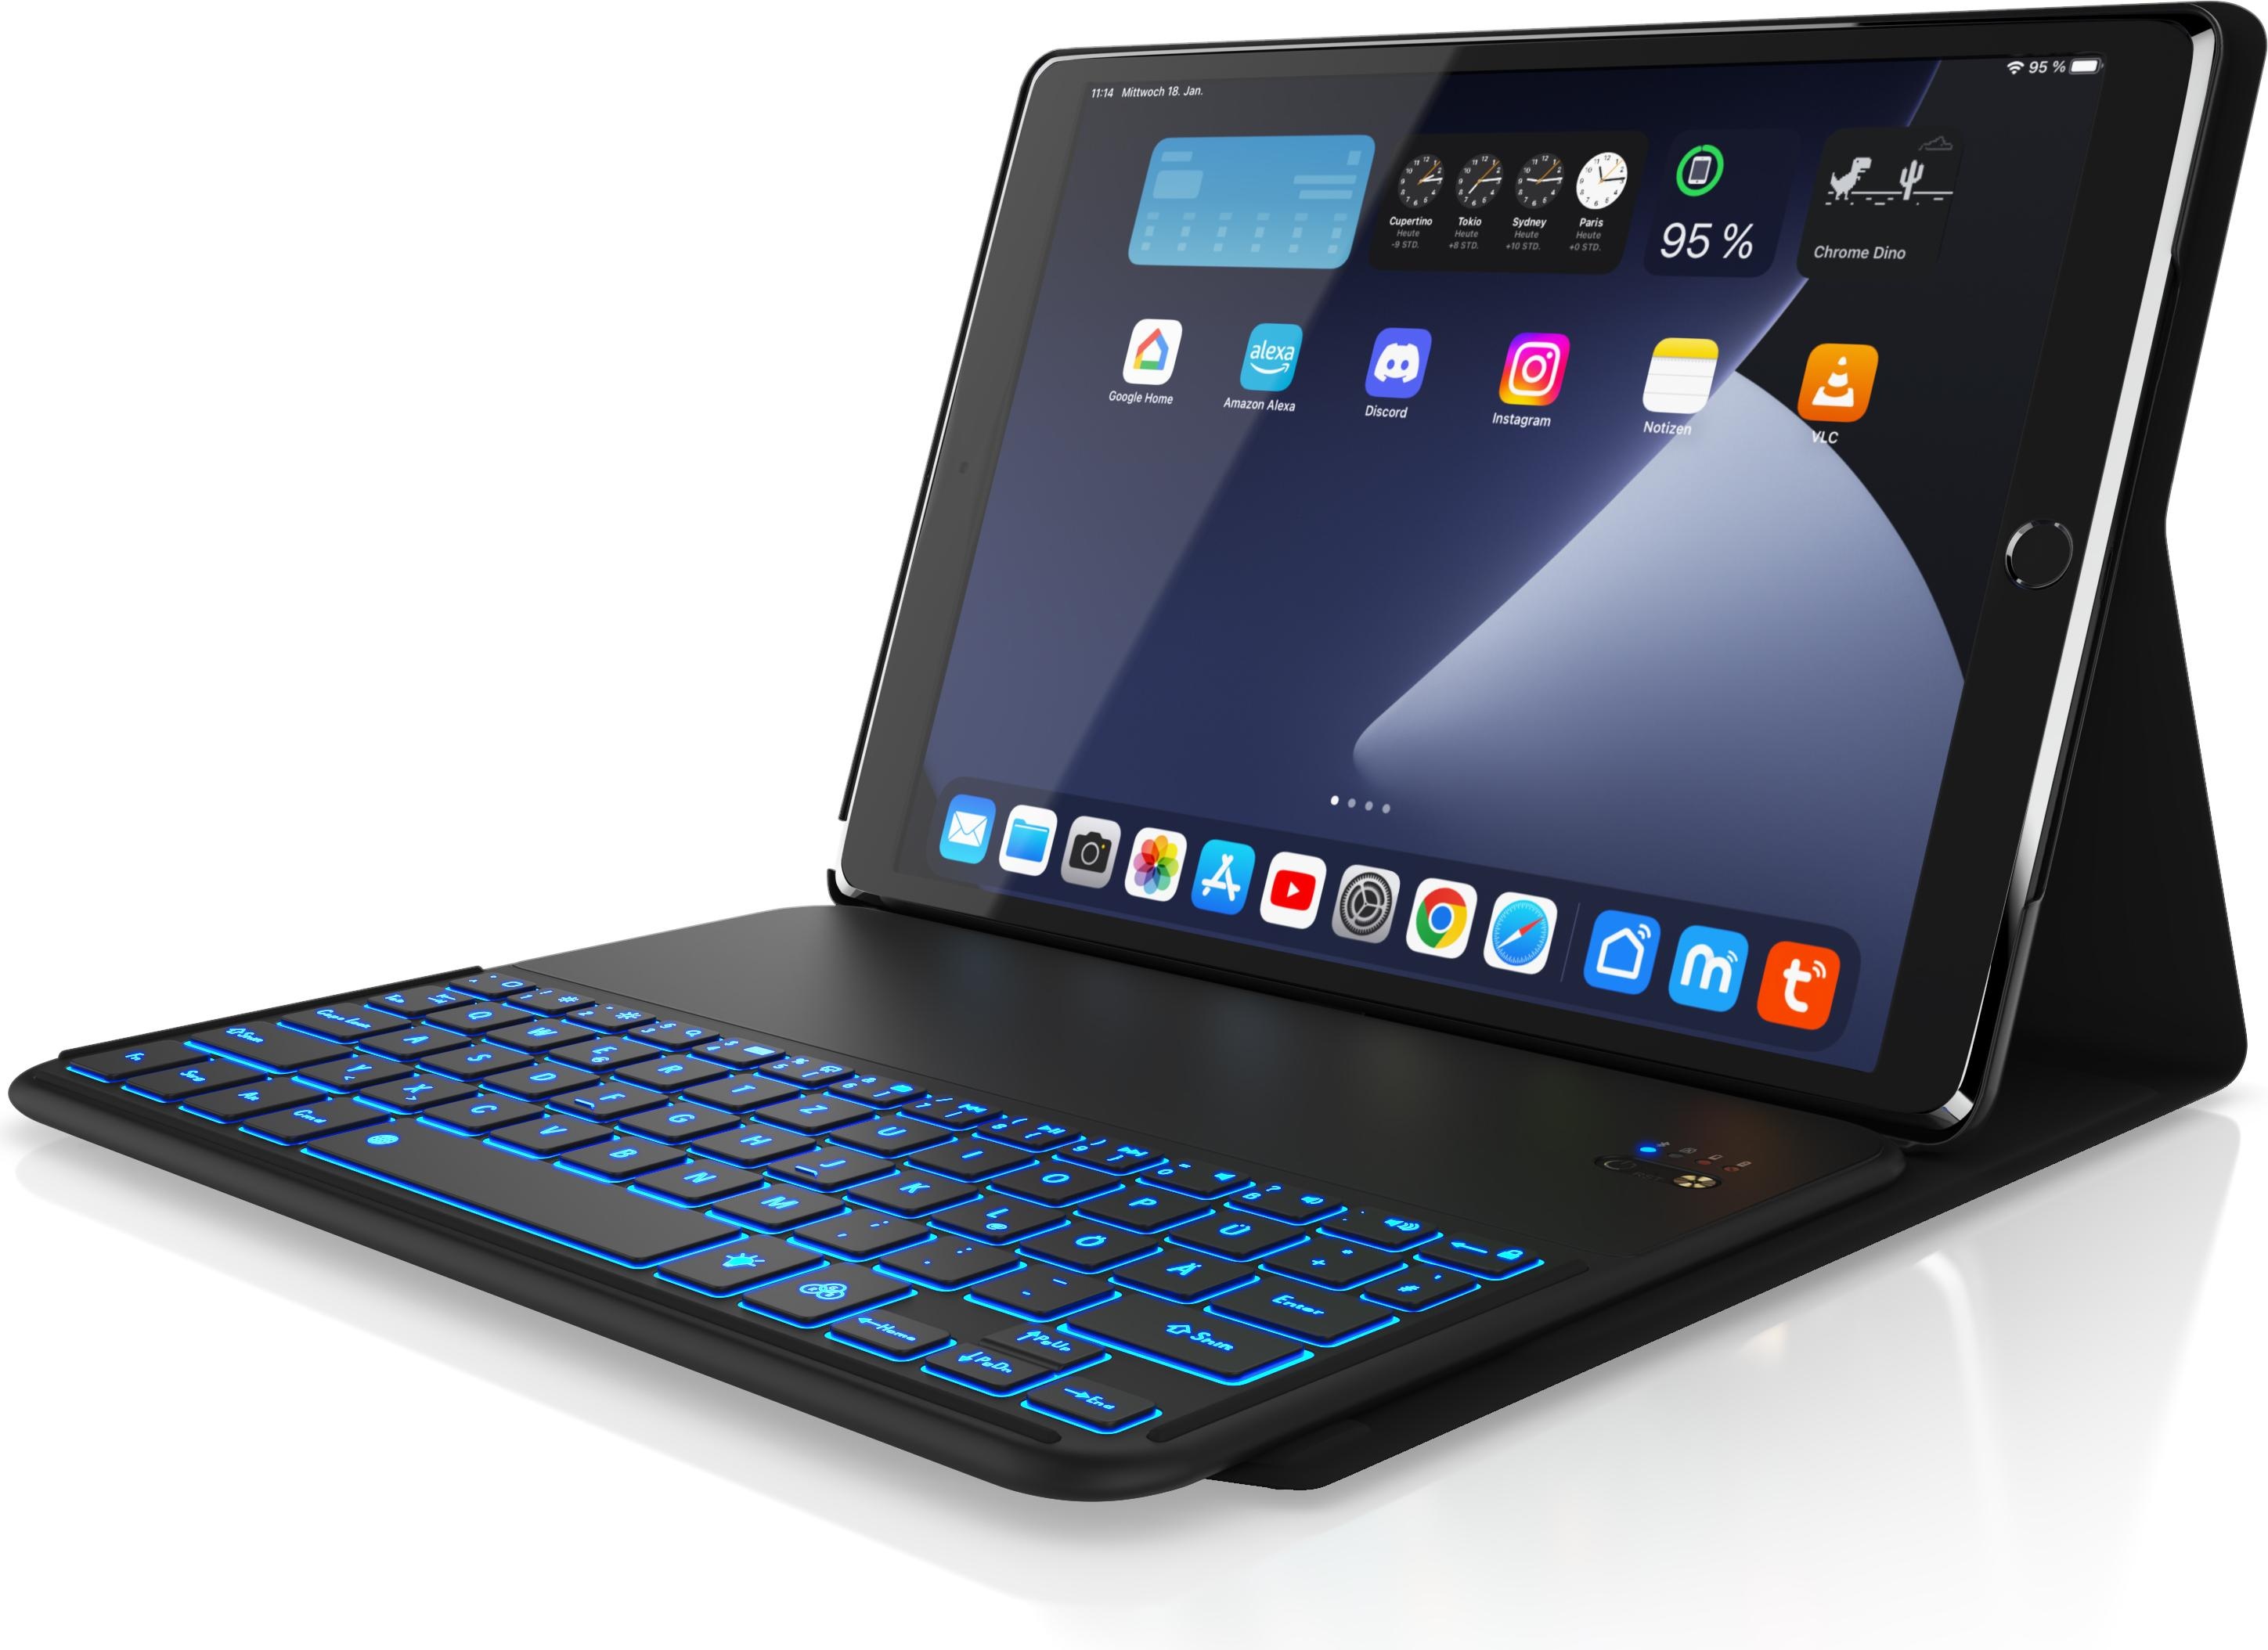 Aplic Tablet Tastatur, Kunstledercase für iPad Pro 10,5", Bluetooth Keyboard mit Apple Layout (DE, iPad Pro 10.5), Tablet Tastatur, Schwarz